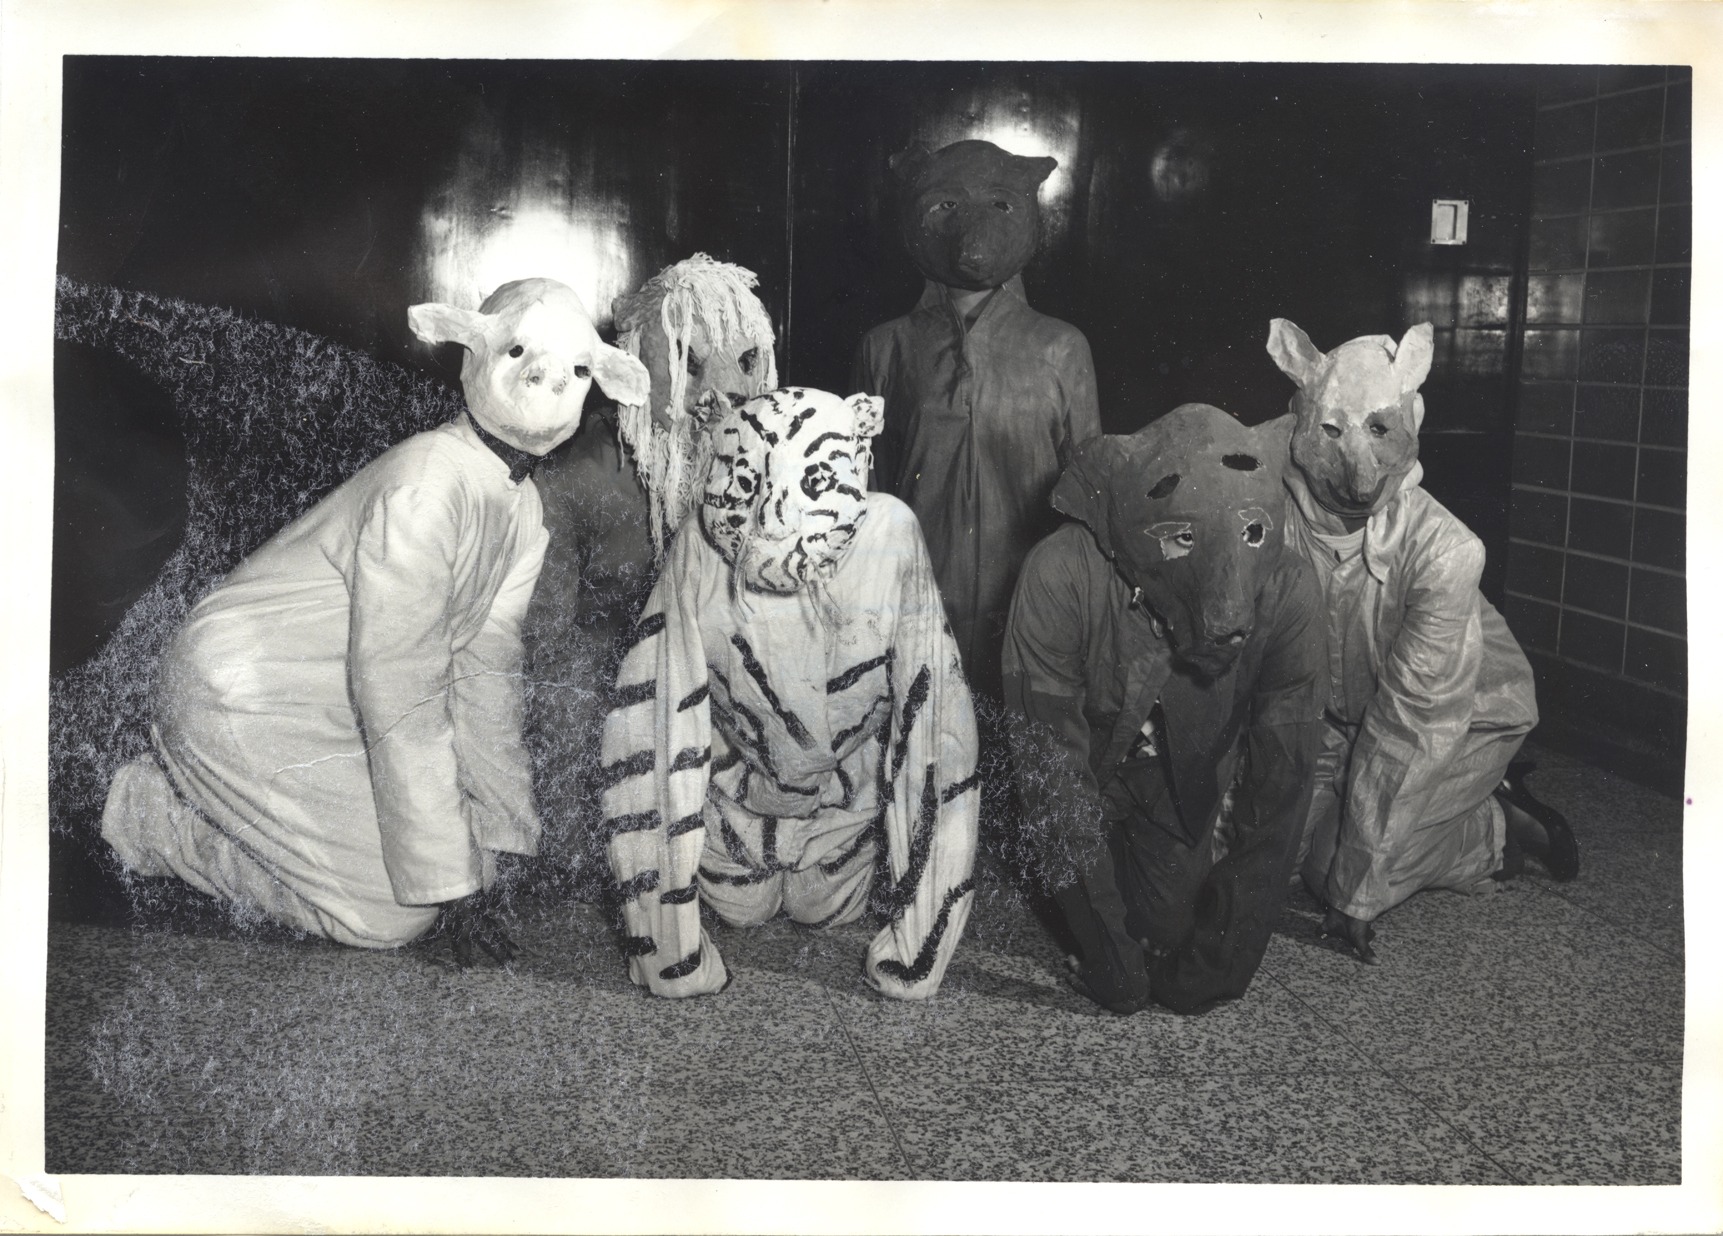 People in animal costumes (MS070 Series VIII, Box 189, folder 1)